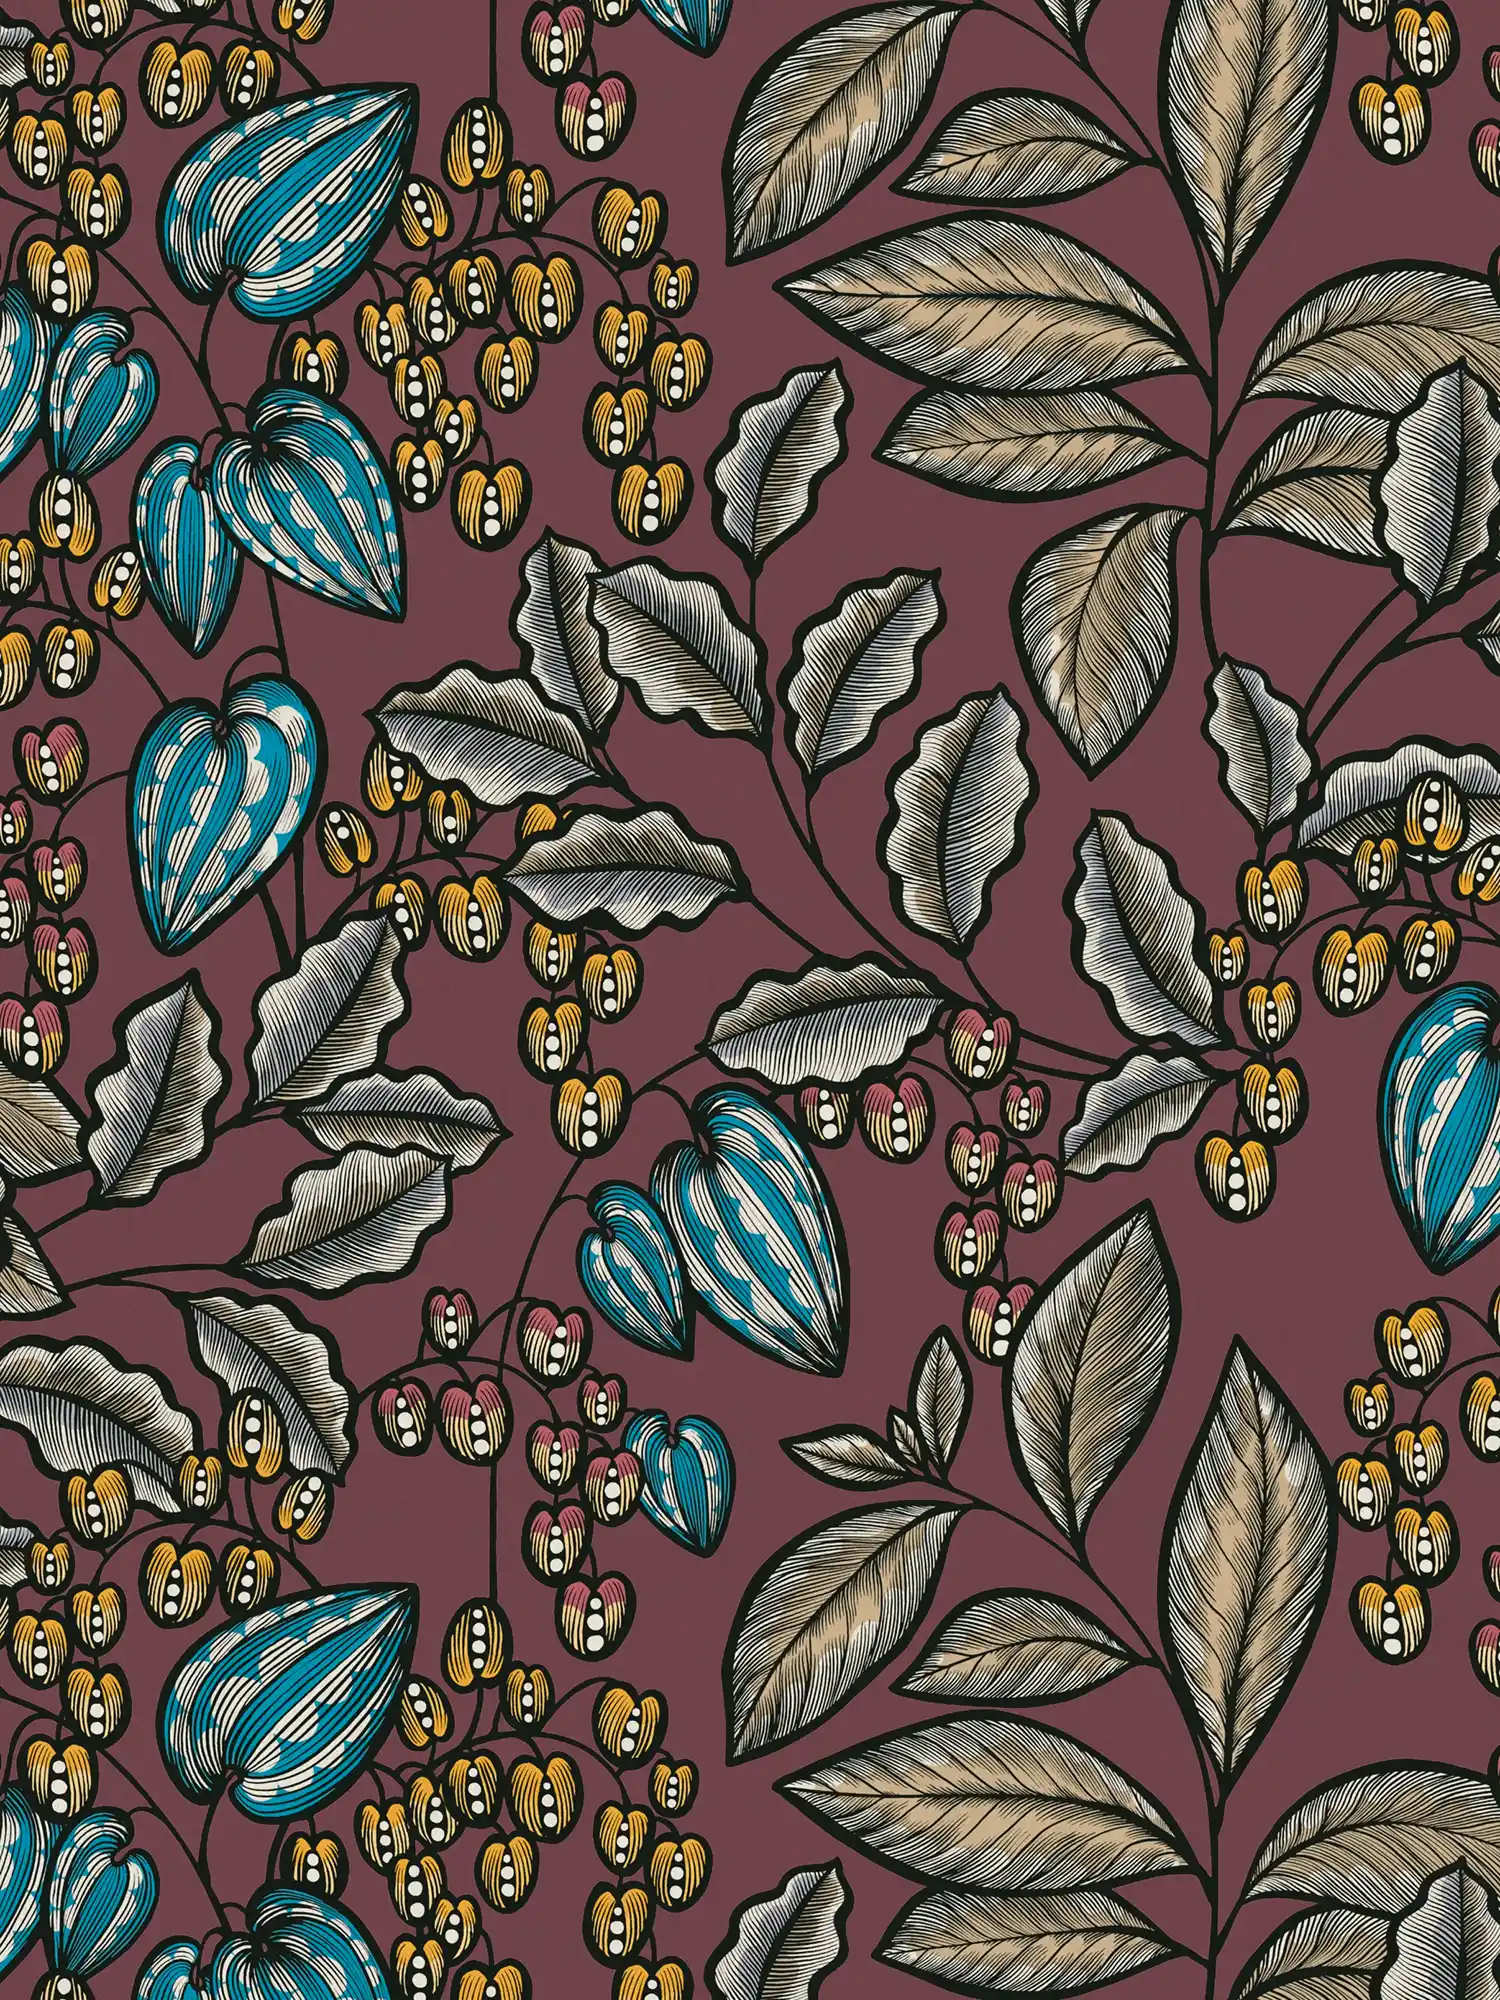             Florale Tapete Lila mit Blätter Print im Scandinavian Stil
        